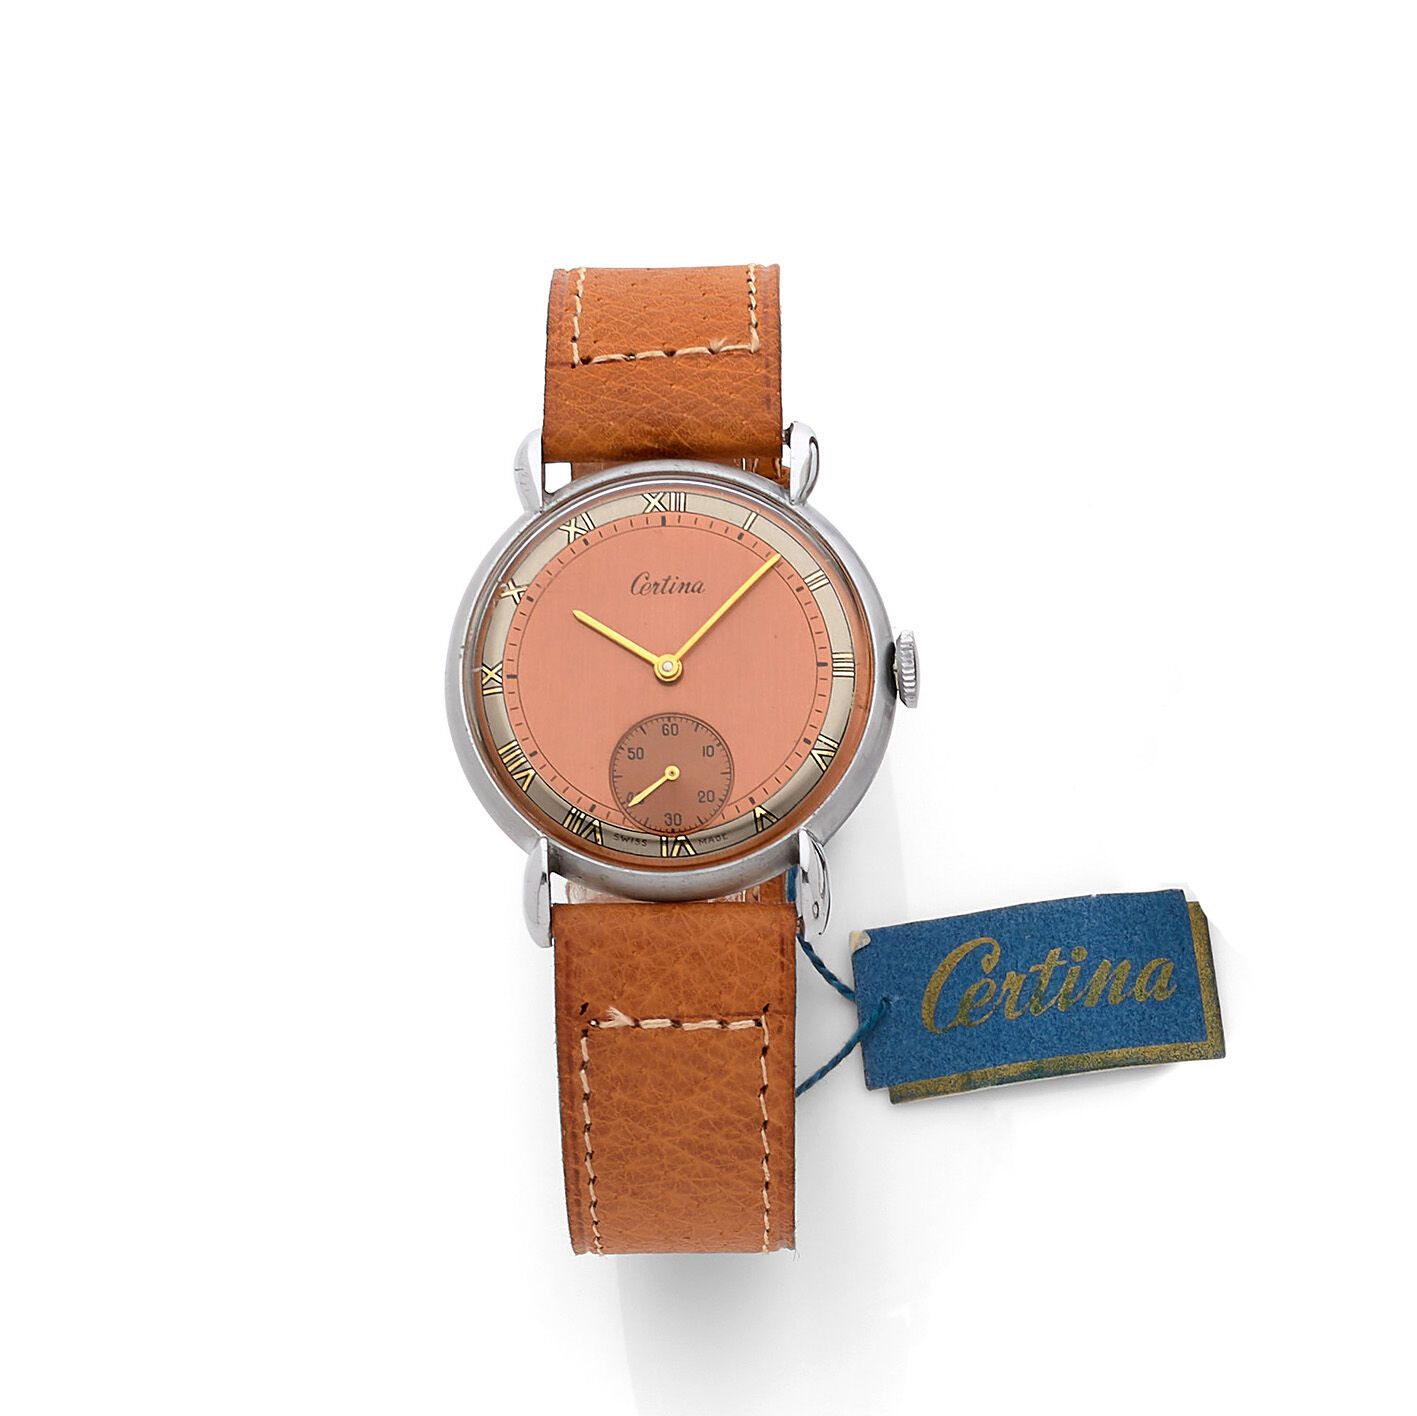 CERTINA CERTINA
精钢金属腕表，约1950年，铜色扇形表盘，银色时圈，彩绘罗马数字，金色指针，6点钟位置有天蓝色小秒针。坚固的钢制表背，编号为28&hellip;